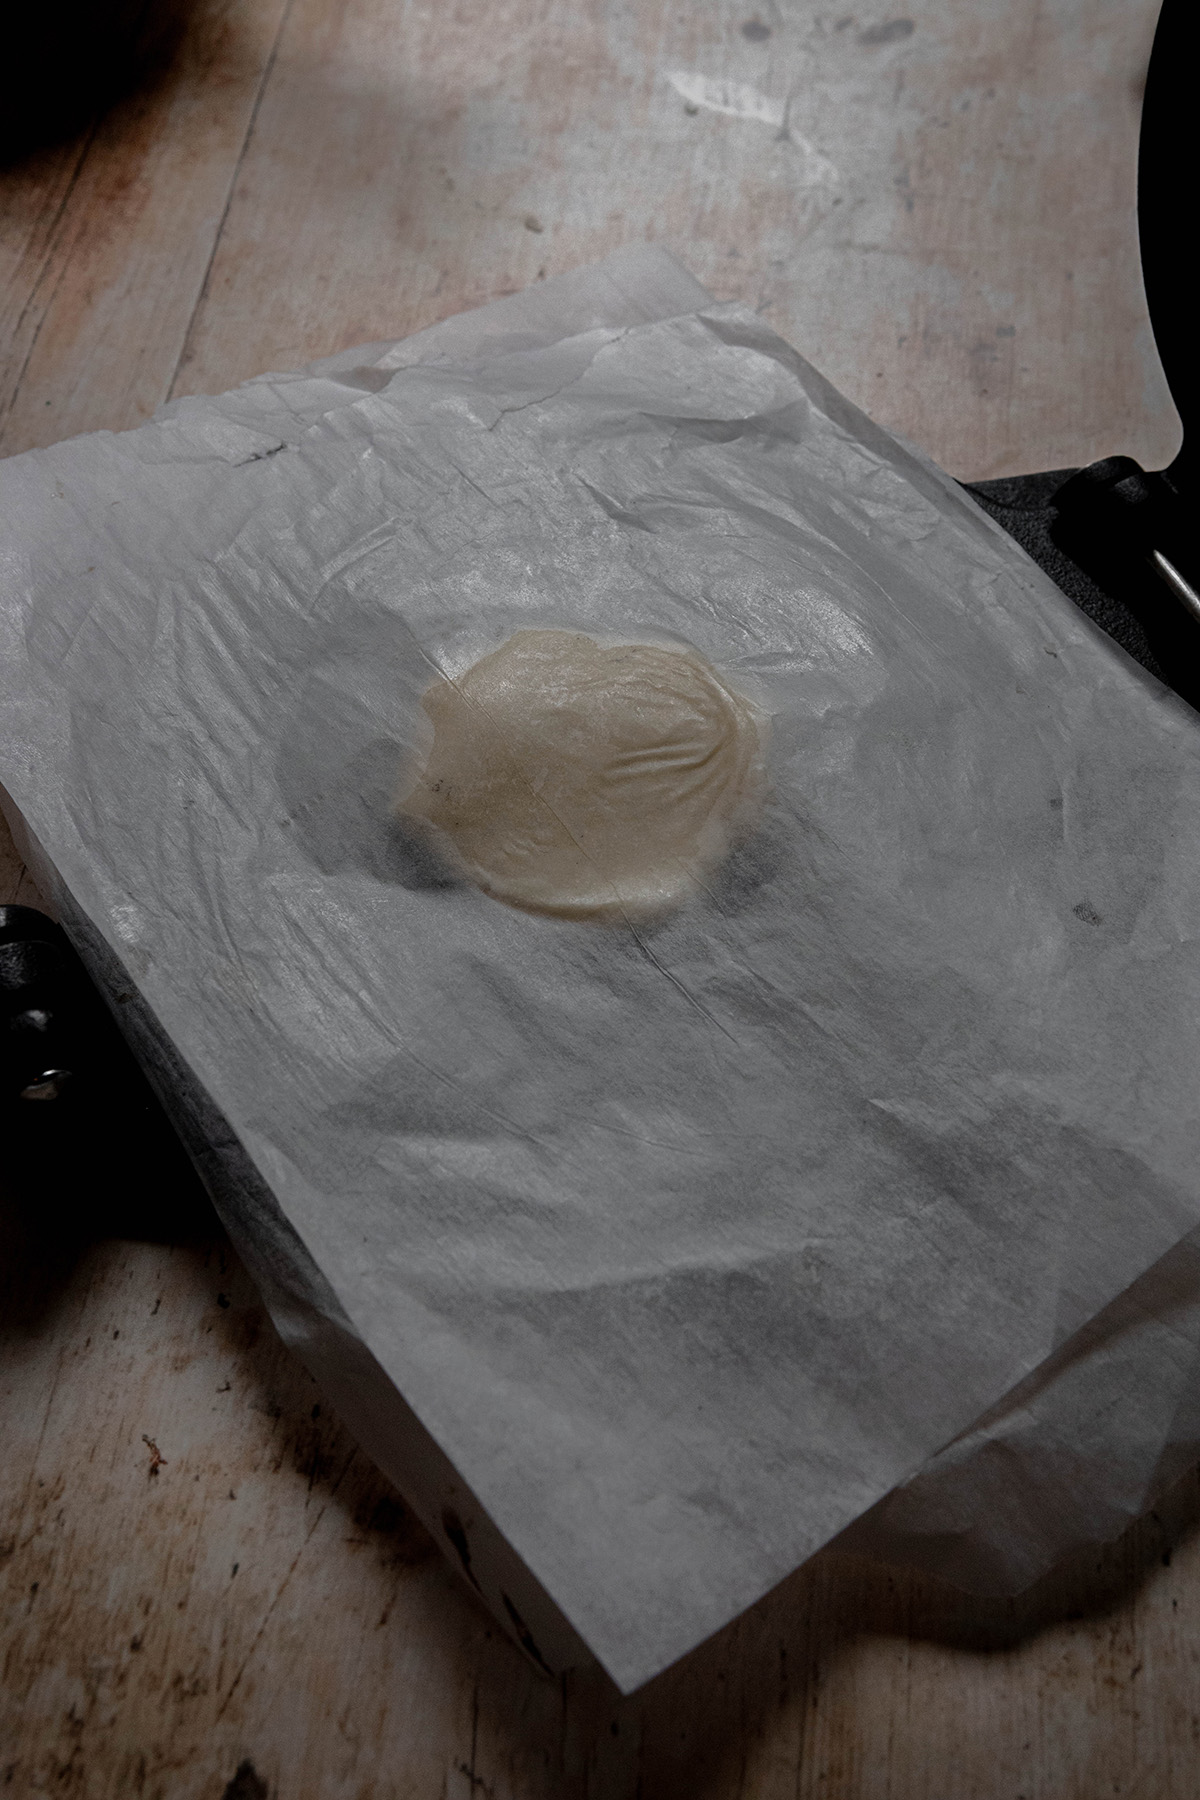 empanada dough between parchment paper